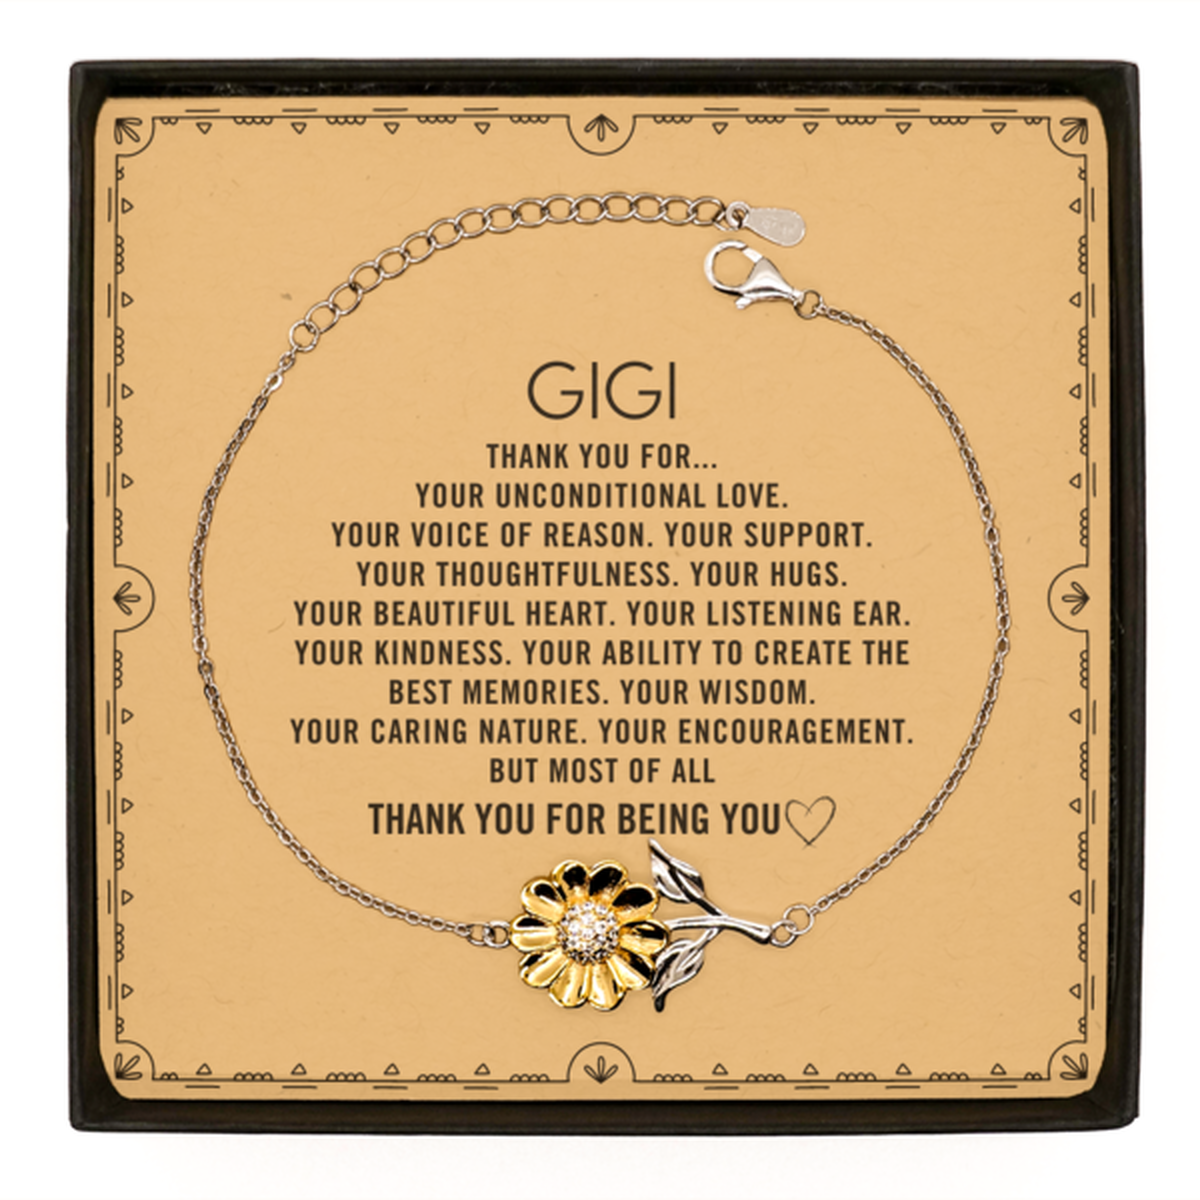 Gigi Sunflower Bracelet Custom, Message Card Gifts For Gigi Christmas Graduation Birthday Gifts for Men Women Gigi Thank you for Your unconditional love